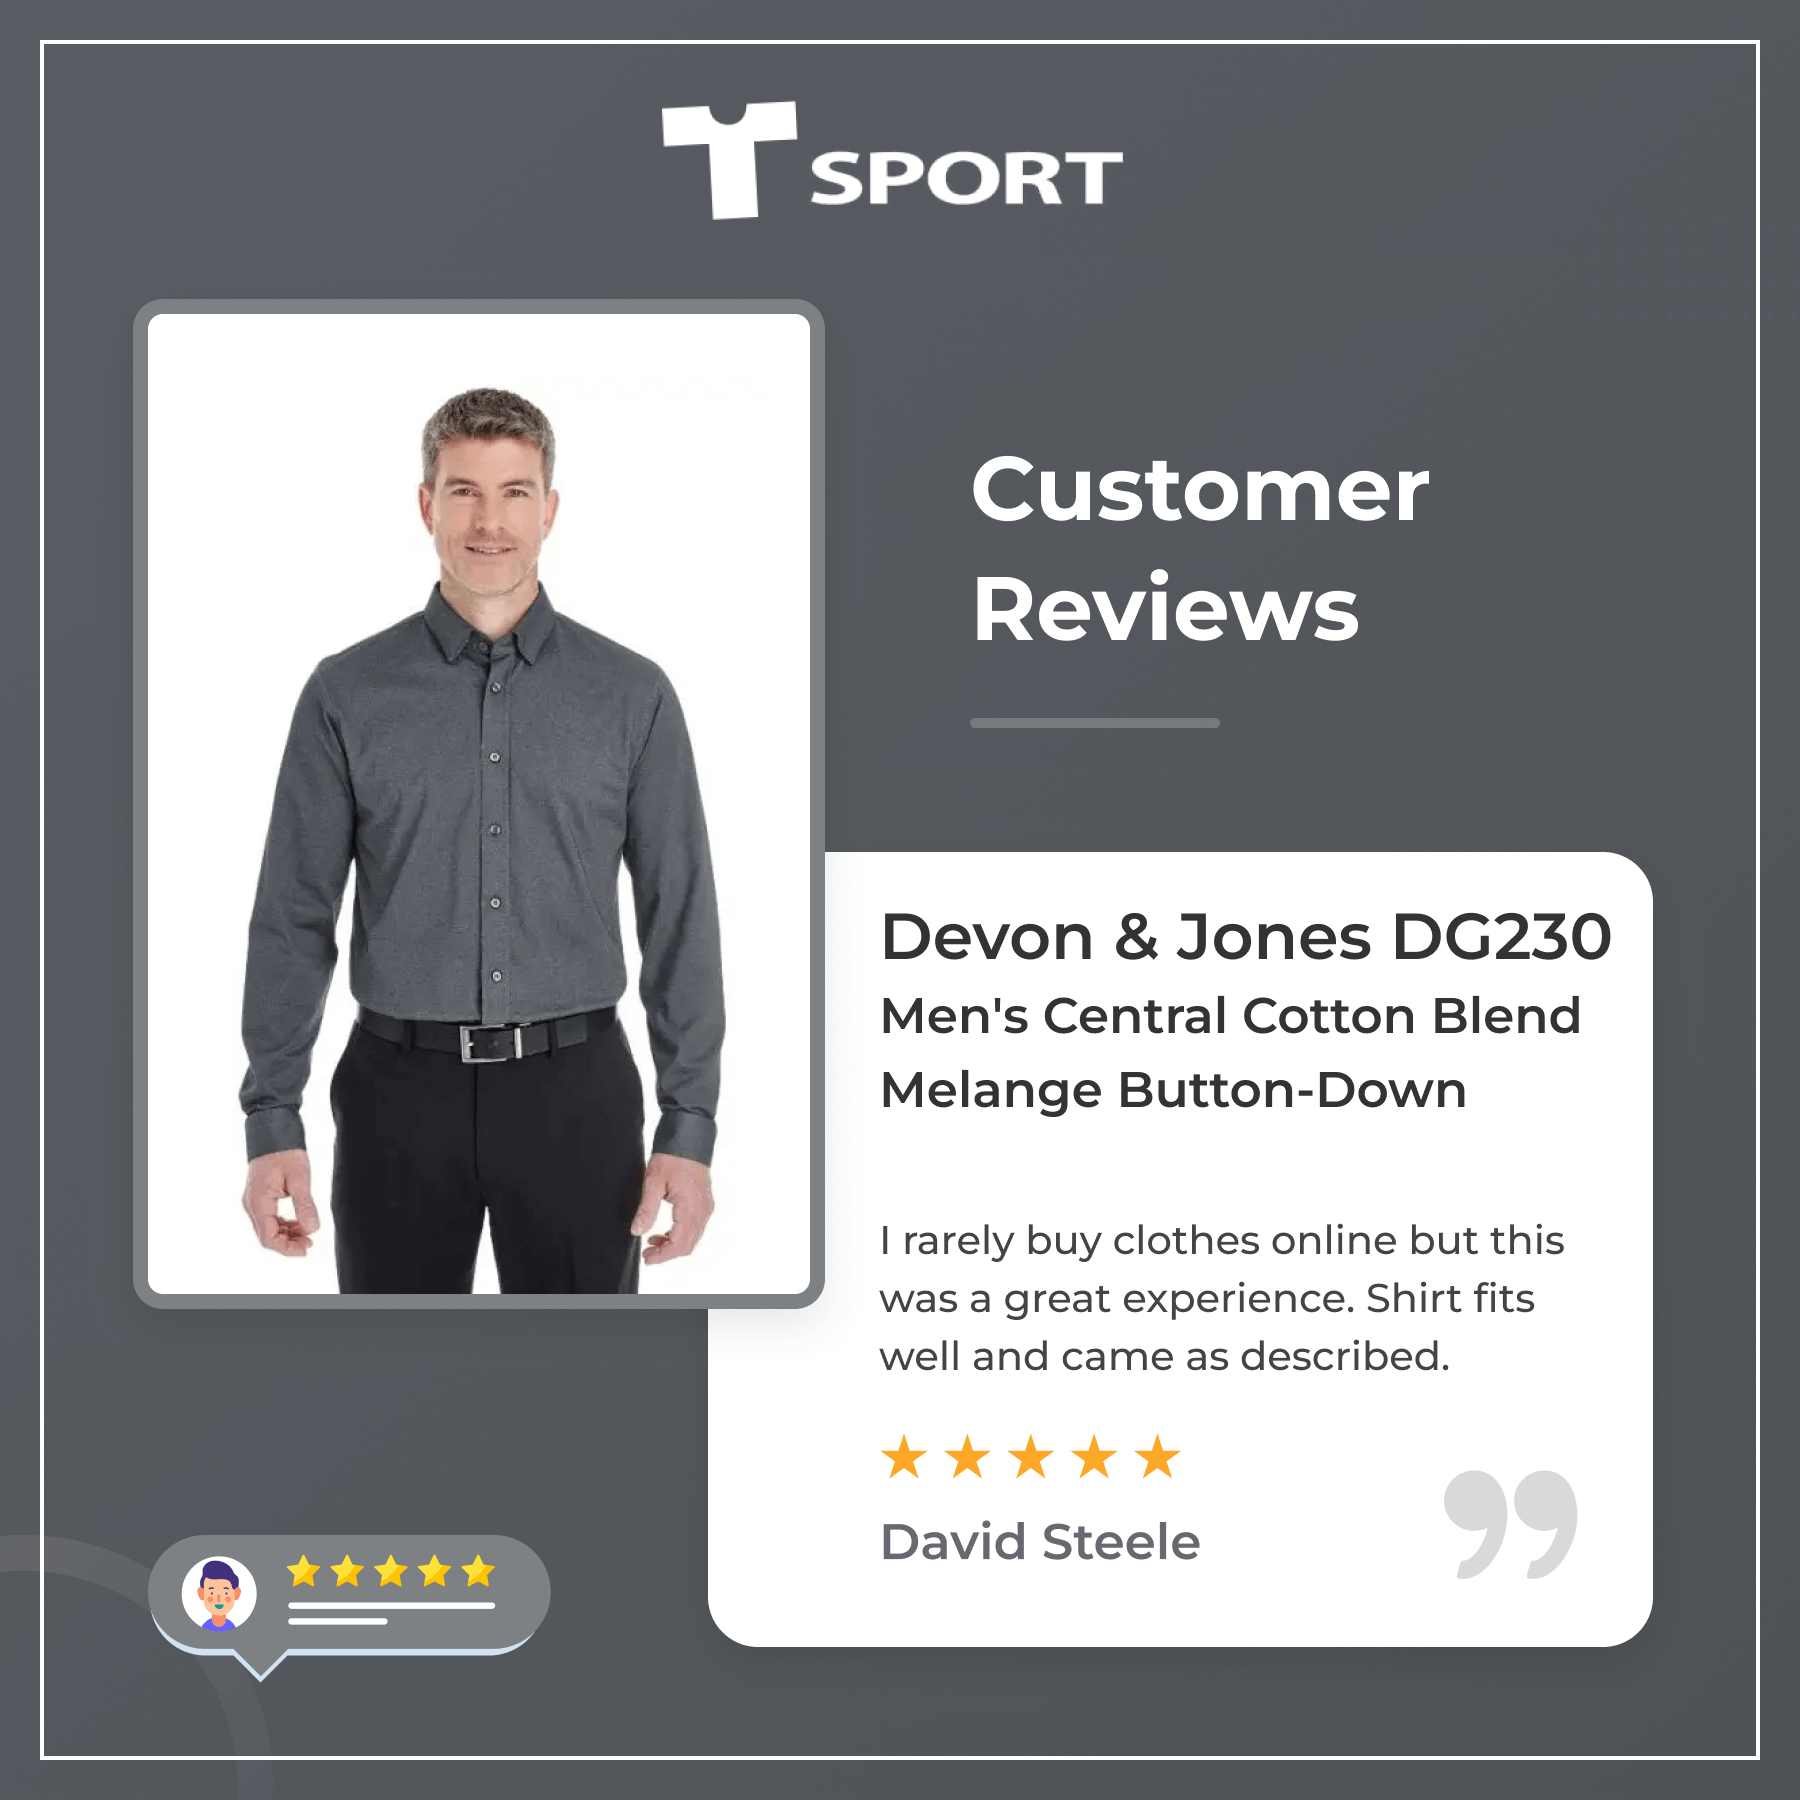 Customer Review - Devon Jones DG230 Men's Central Cotton Blend Melange Button-Down 5-Star